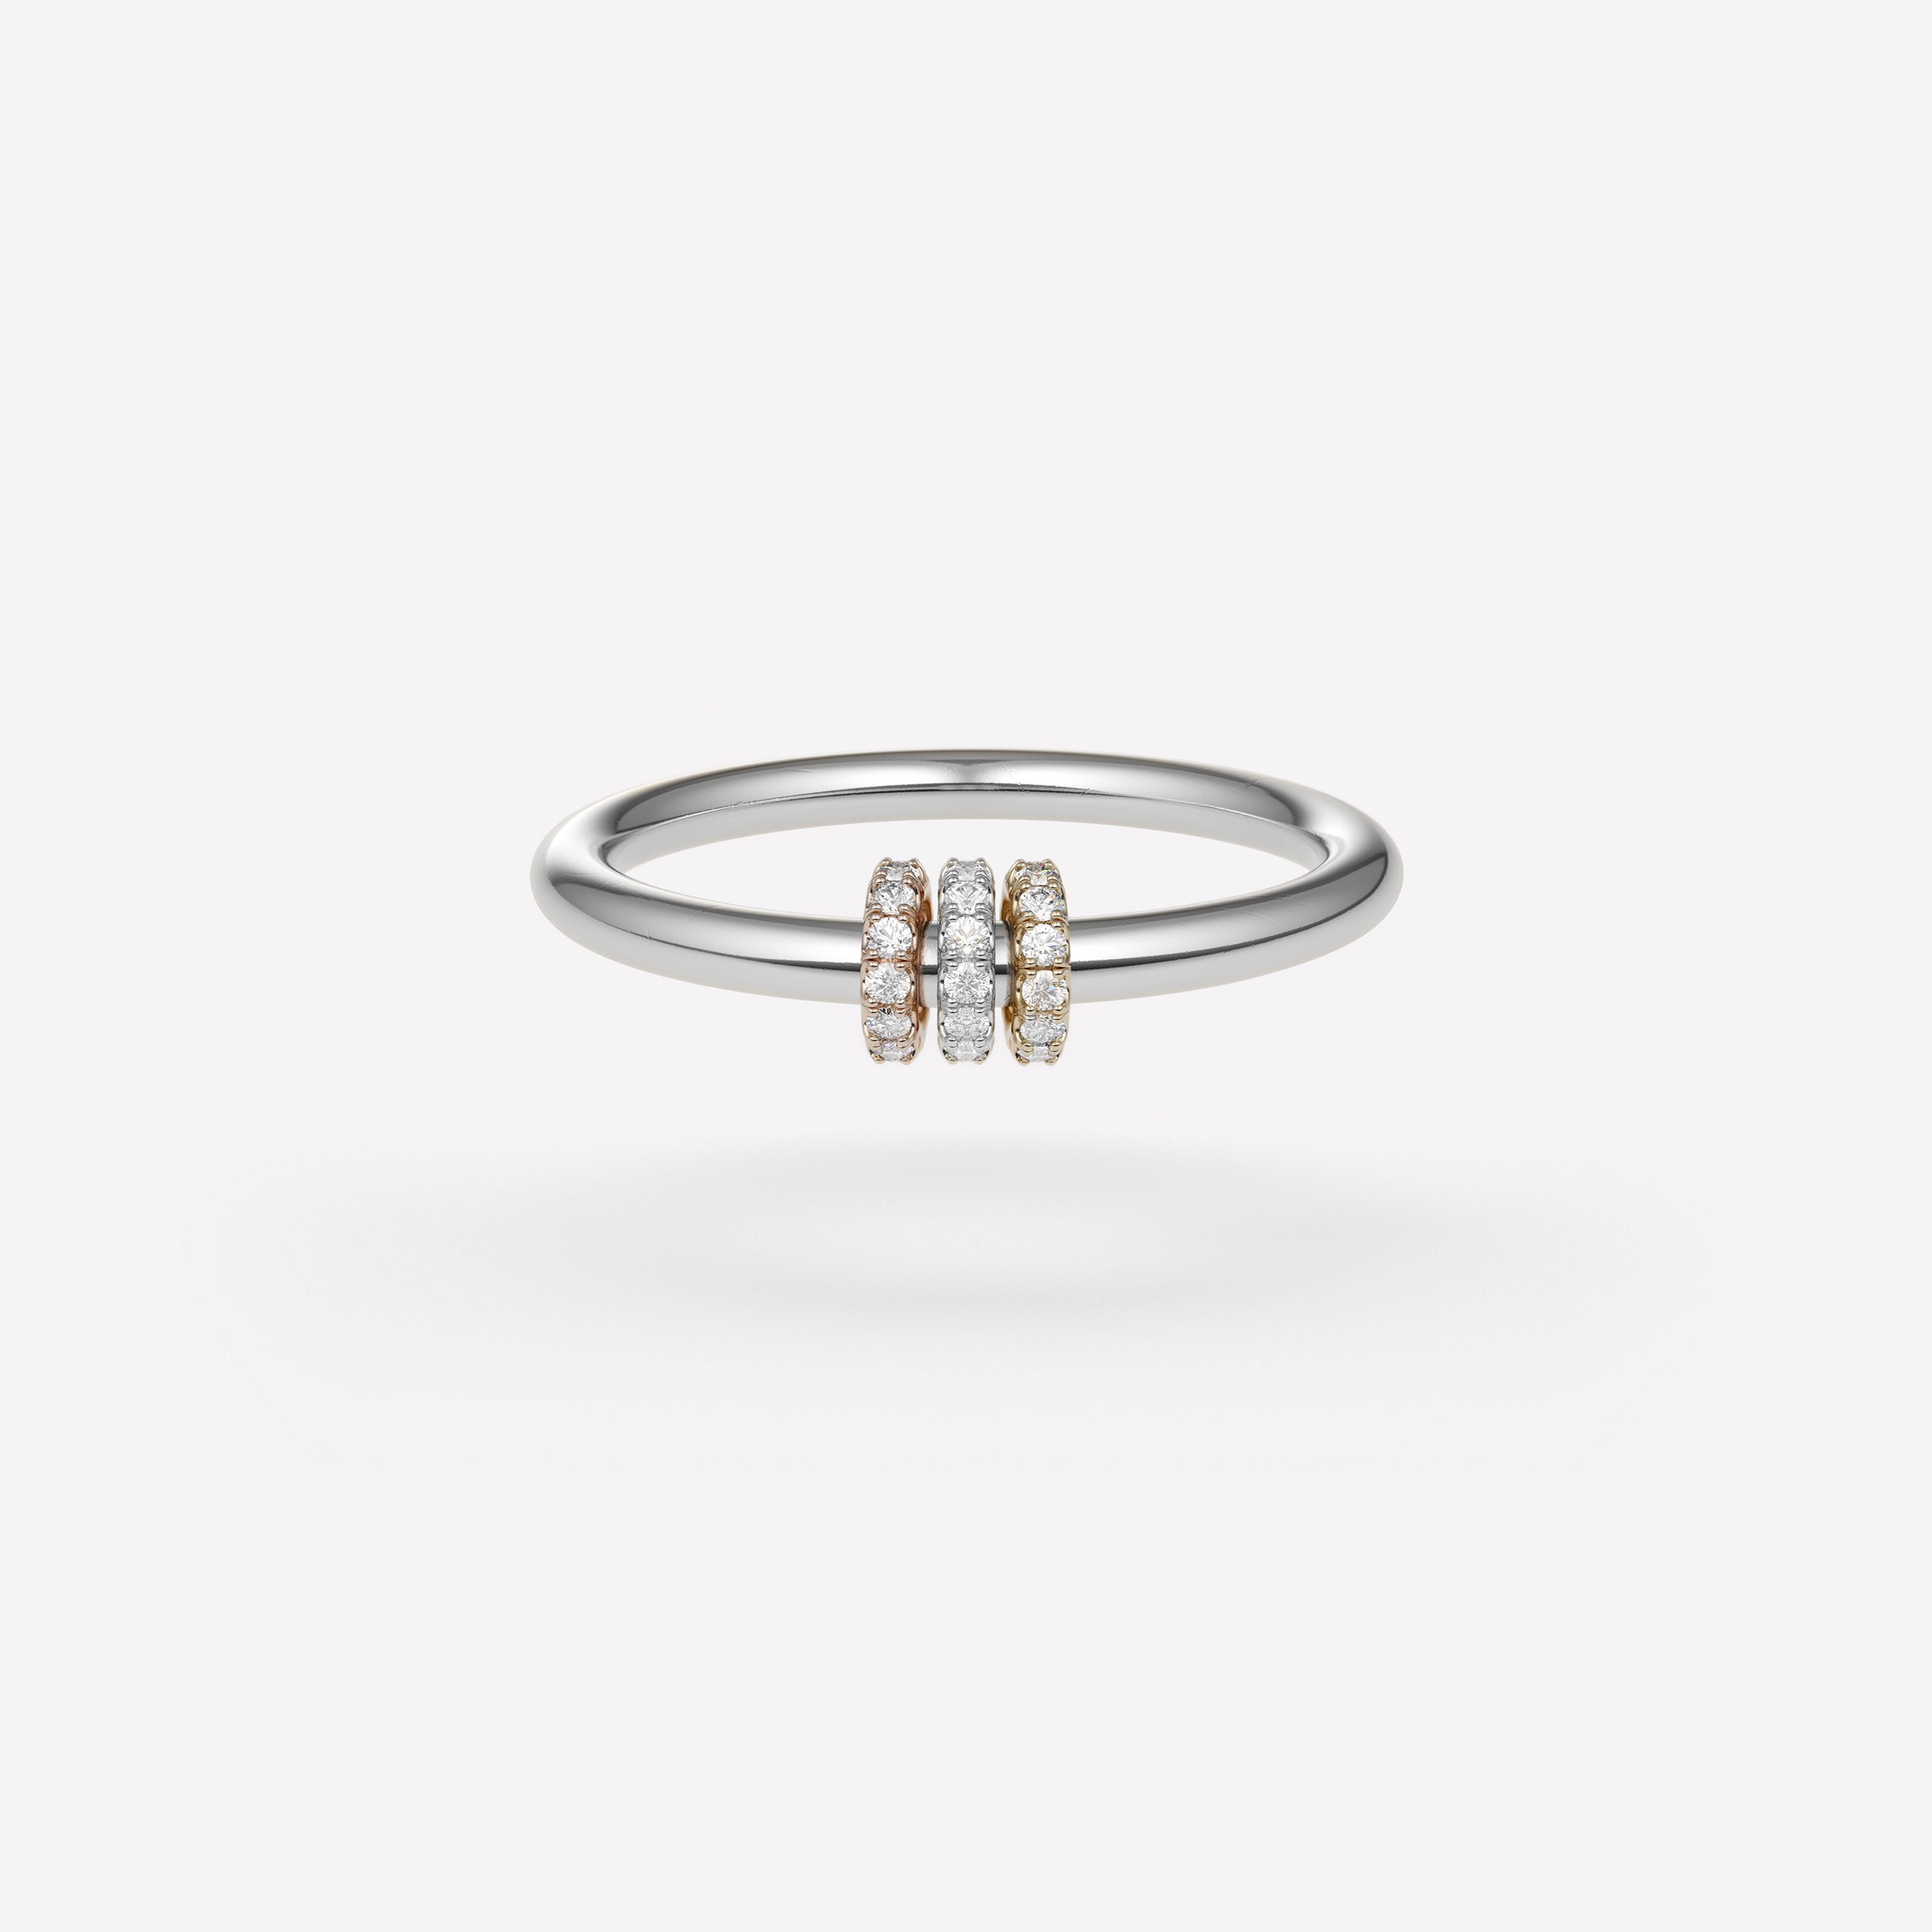 Cushion Cut Moissanite Halo Engagement Ring, Tiffany Design – Flawless  Moissanite